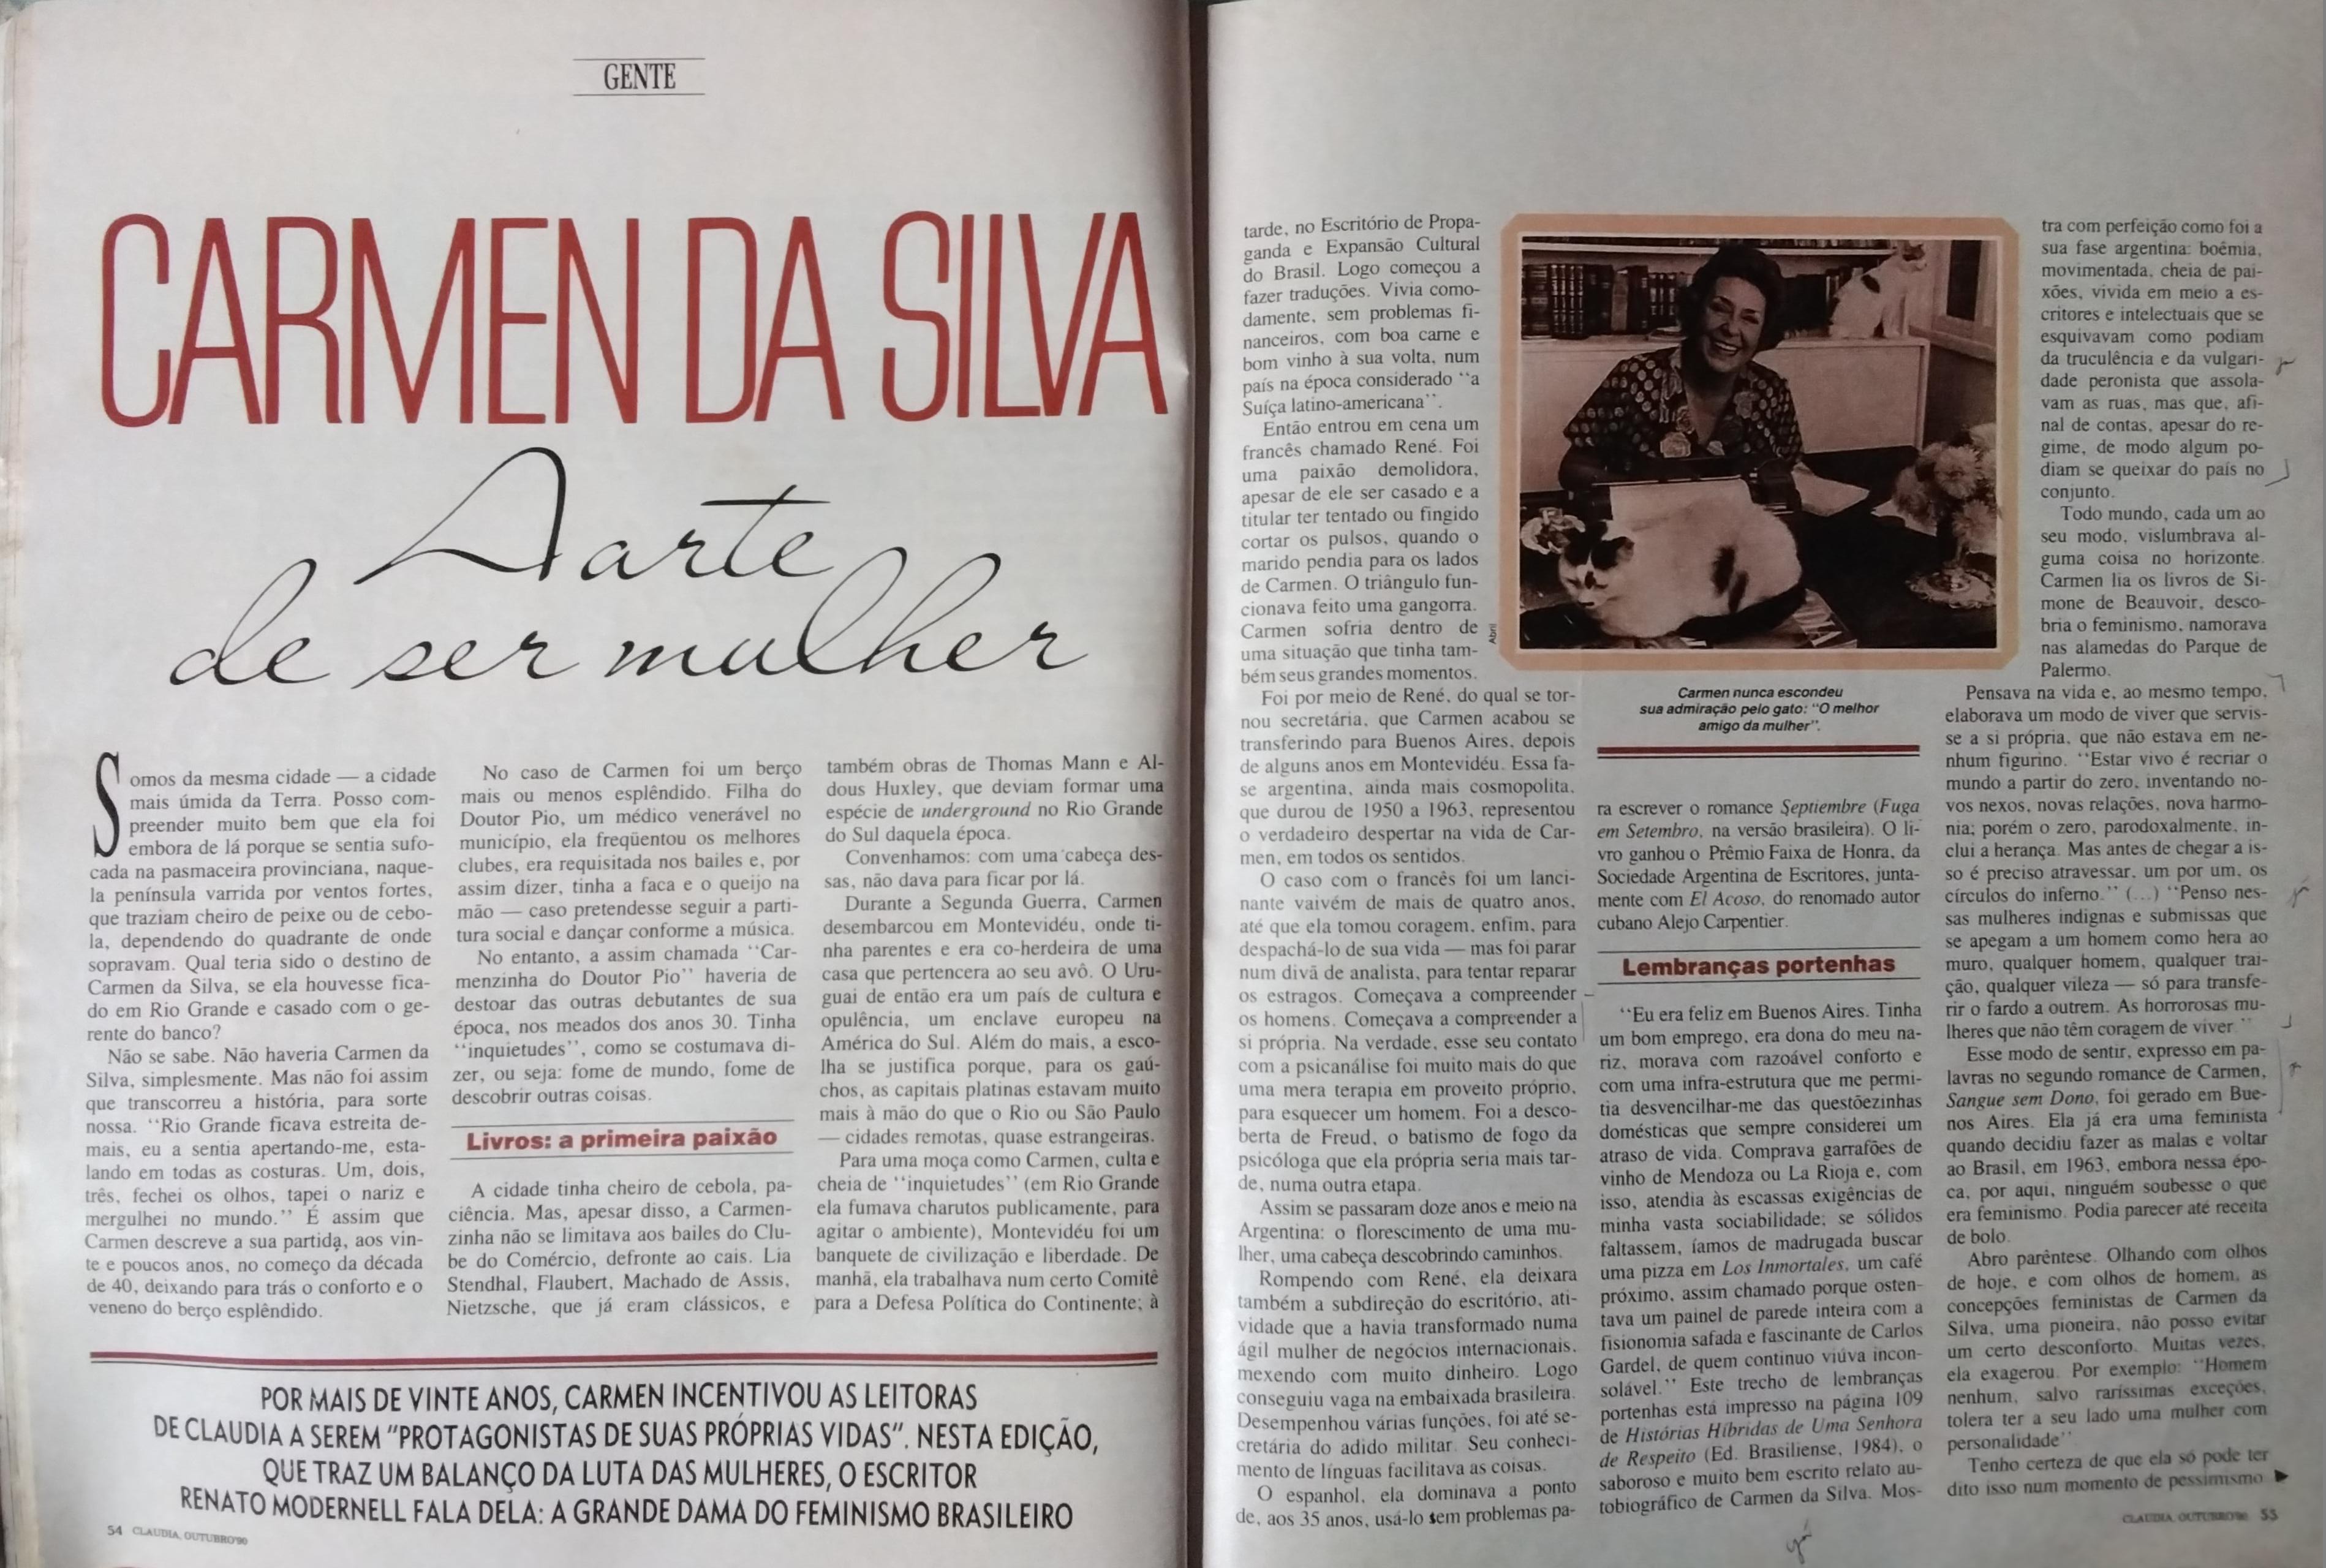 Revista Claudia, nº 349, outubro de 1990. Pg. 54 a 56.